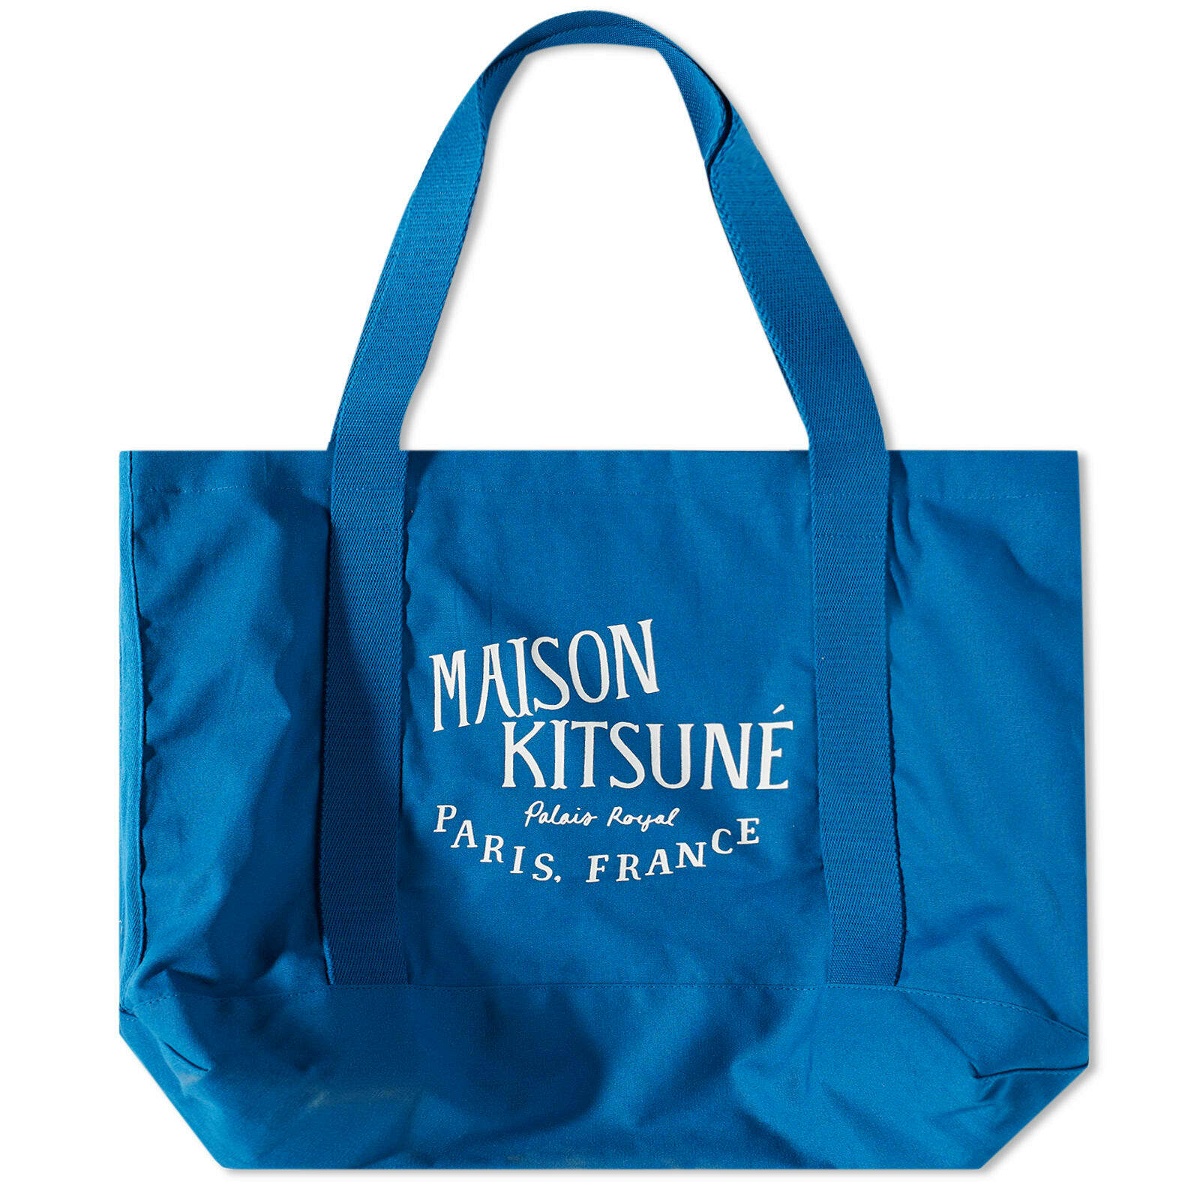 Maison Kitsuné Men's Palais Royal Shopping Bag in Sapphire Maison Kitsune